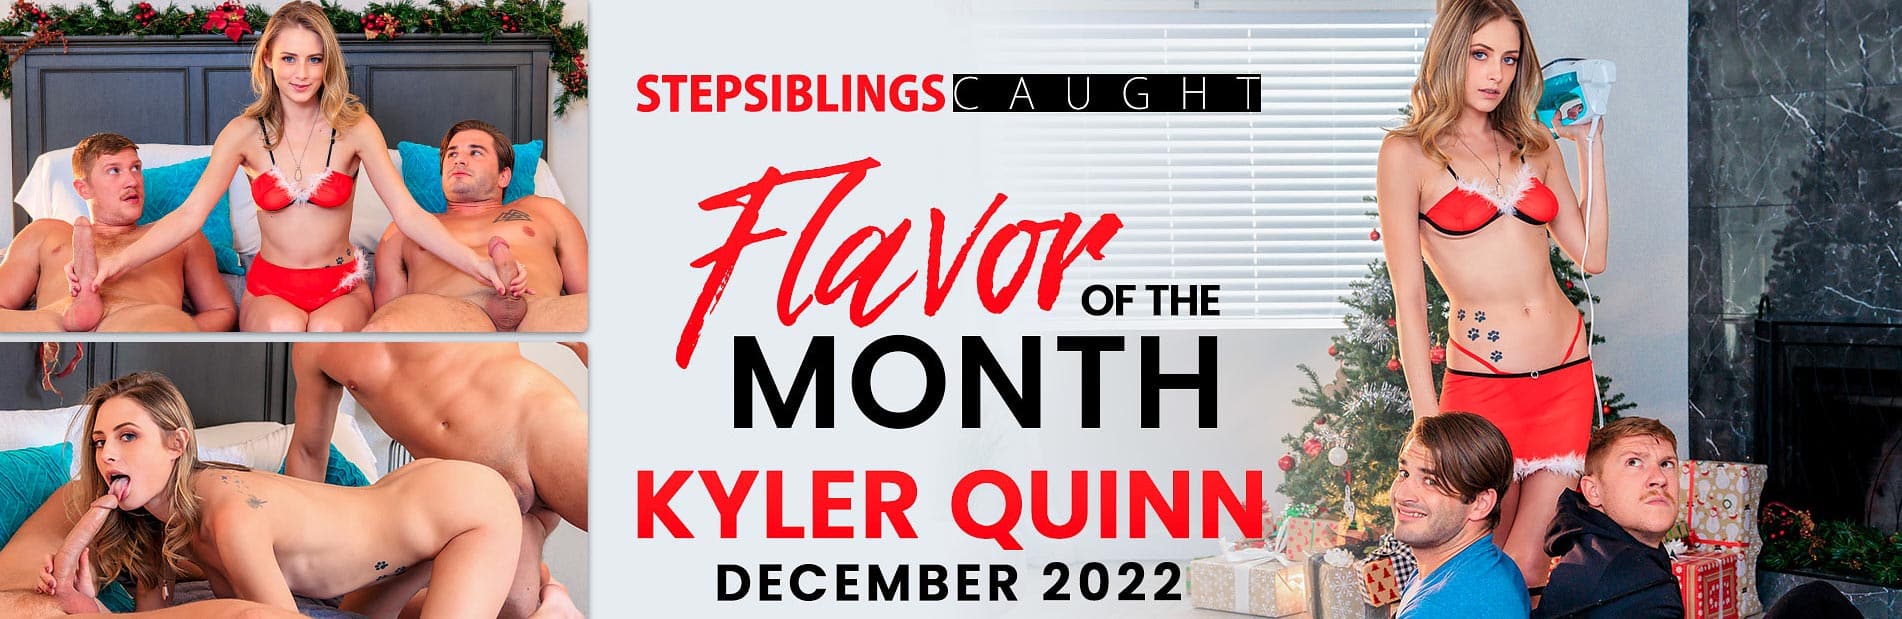 december_2022_flavor_of_the_month_kyler_quinn